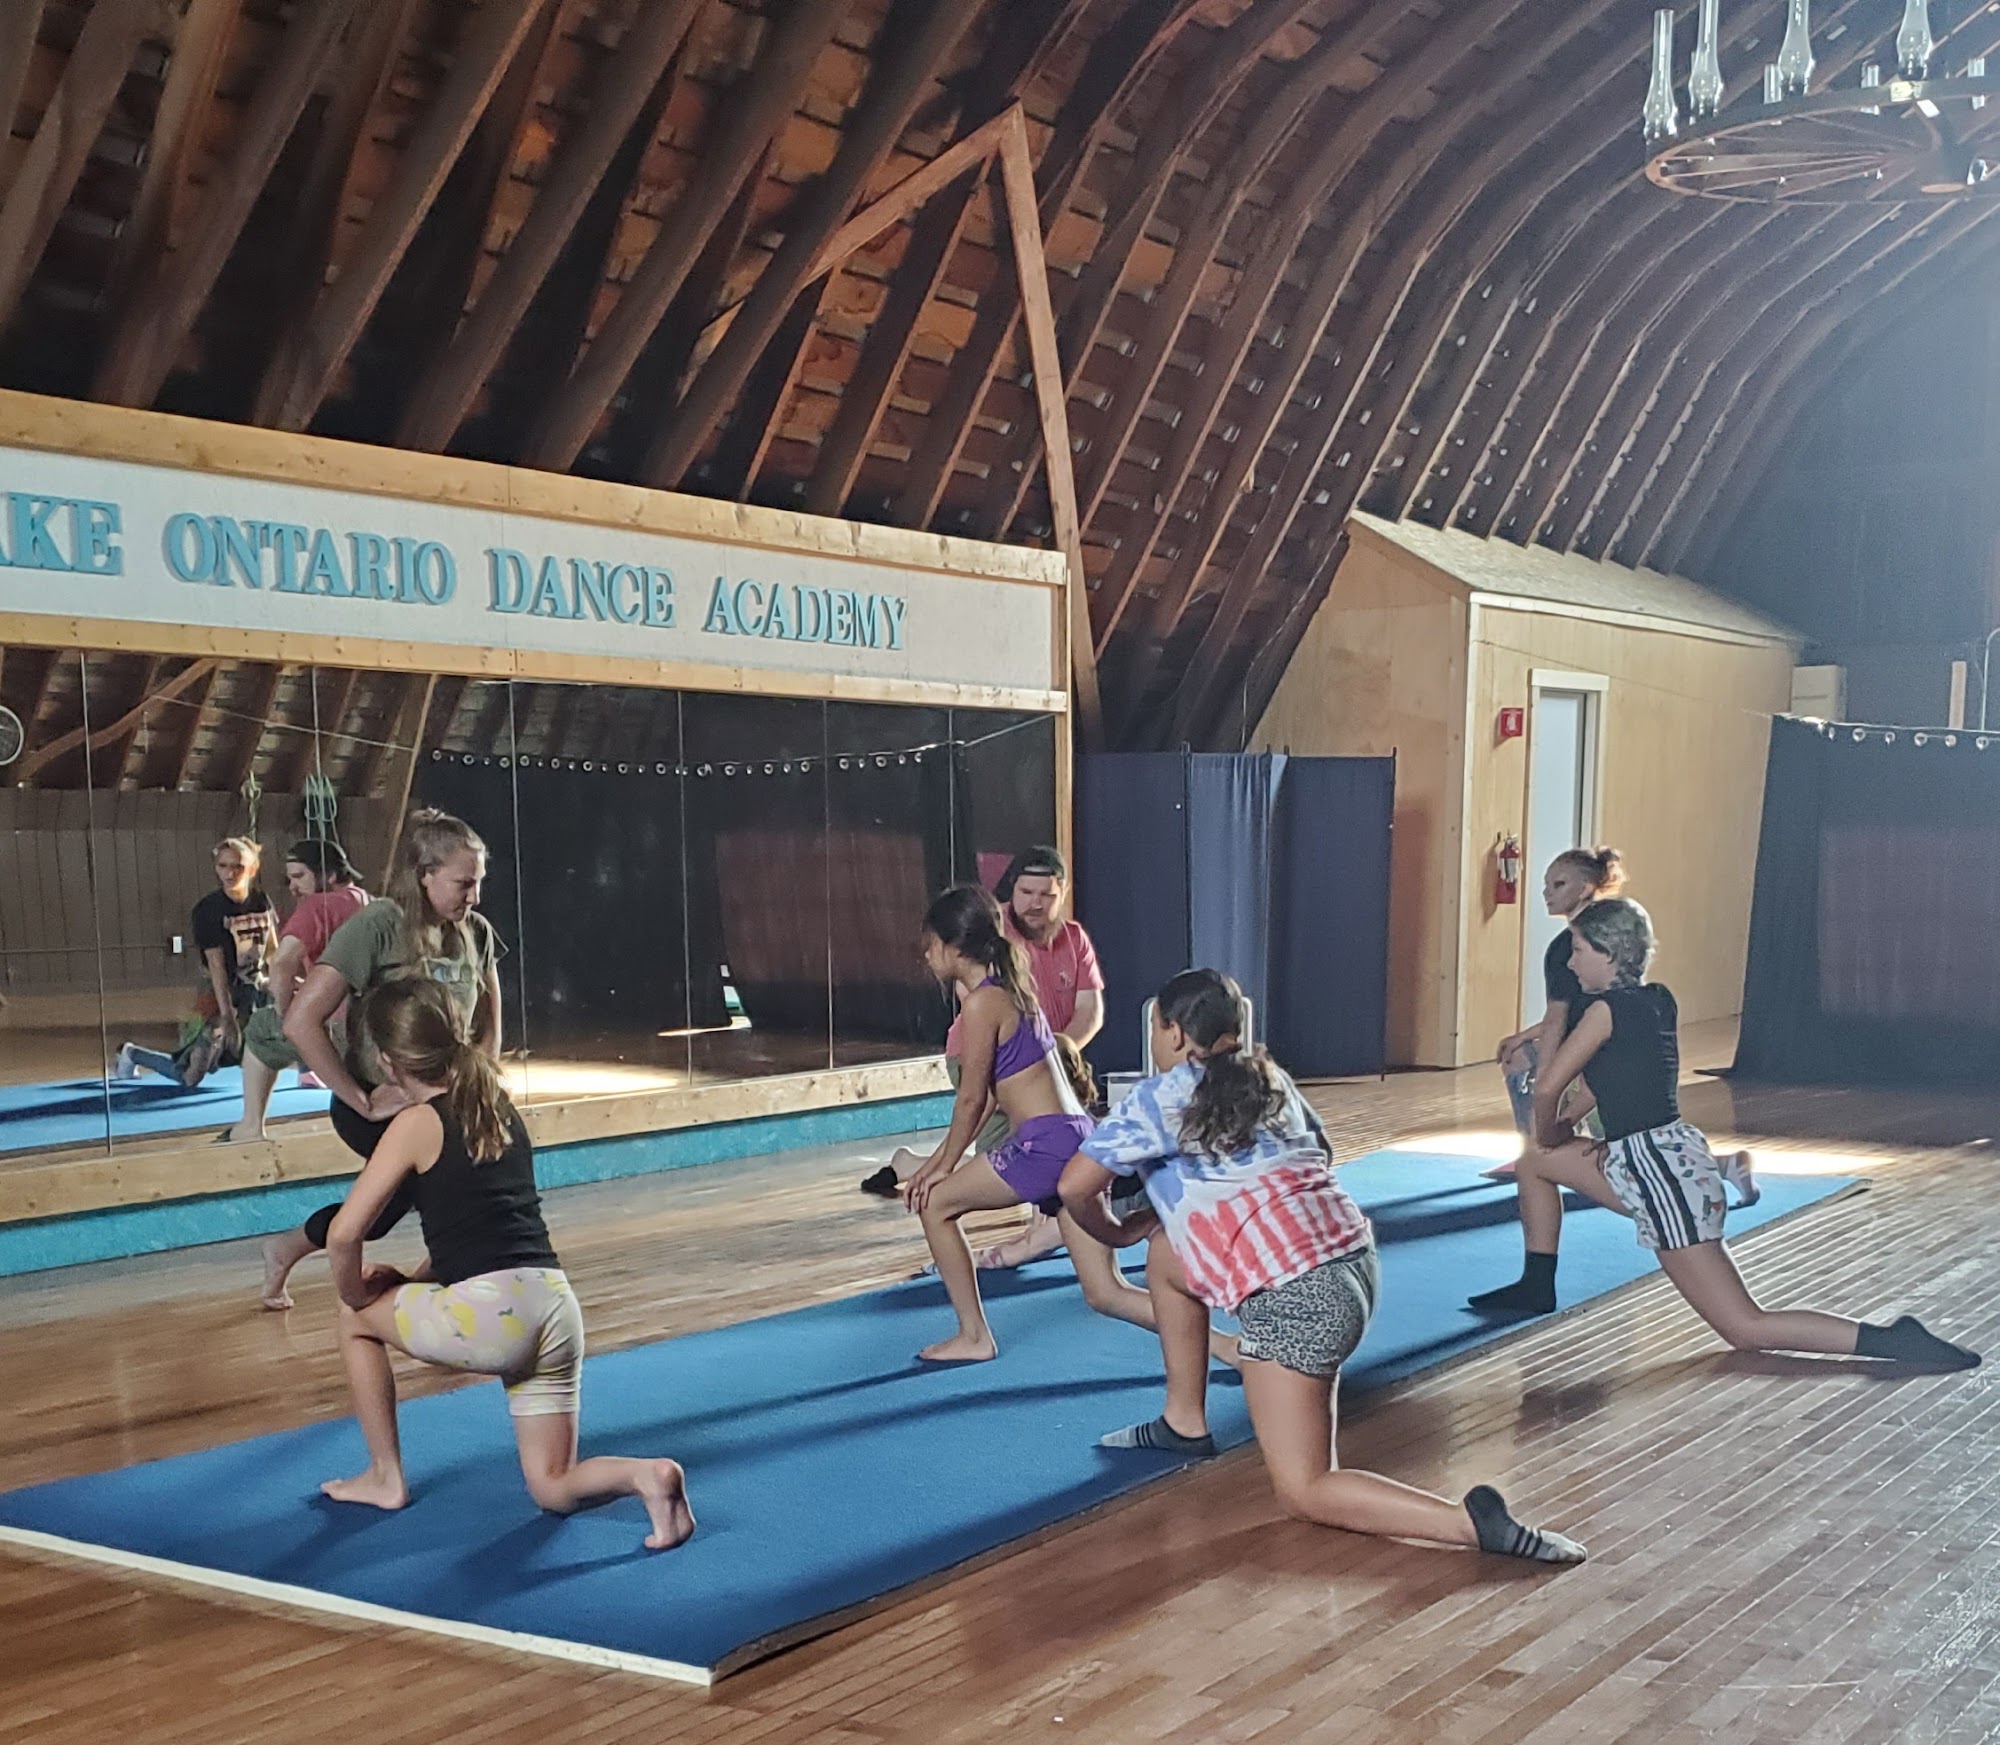 Lake Ontario Dance Academy 4500 NY-414, North Rose New York 14516